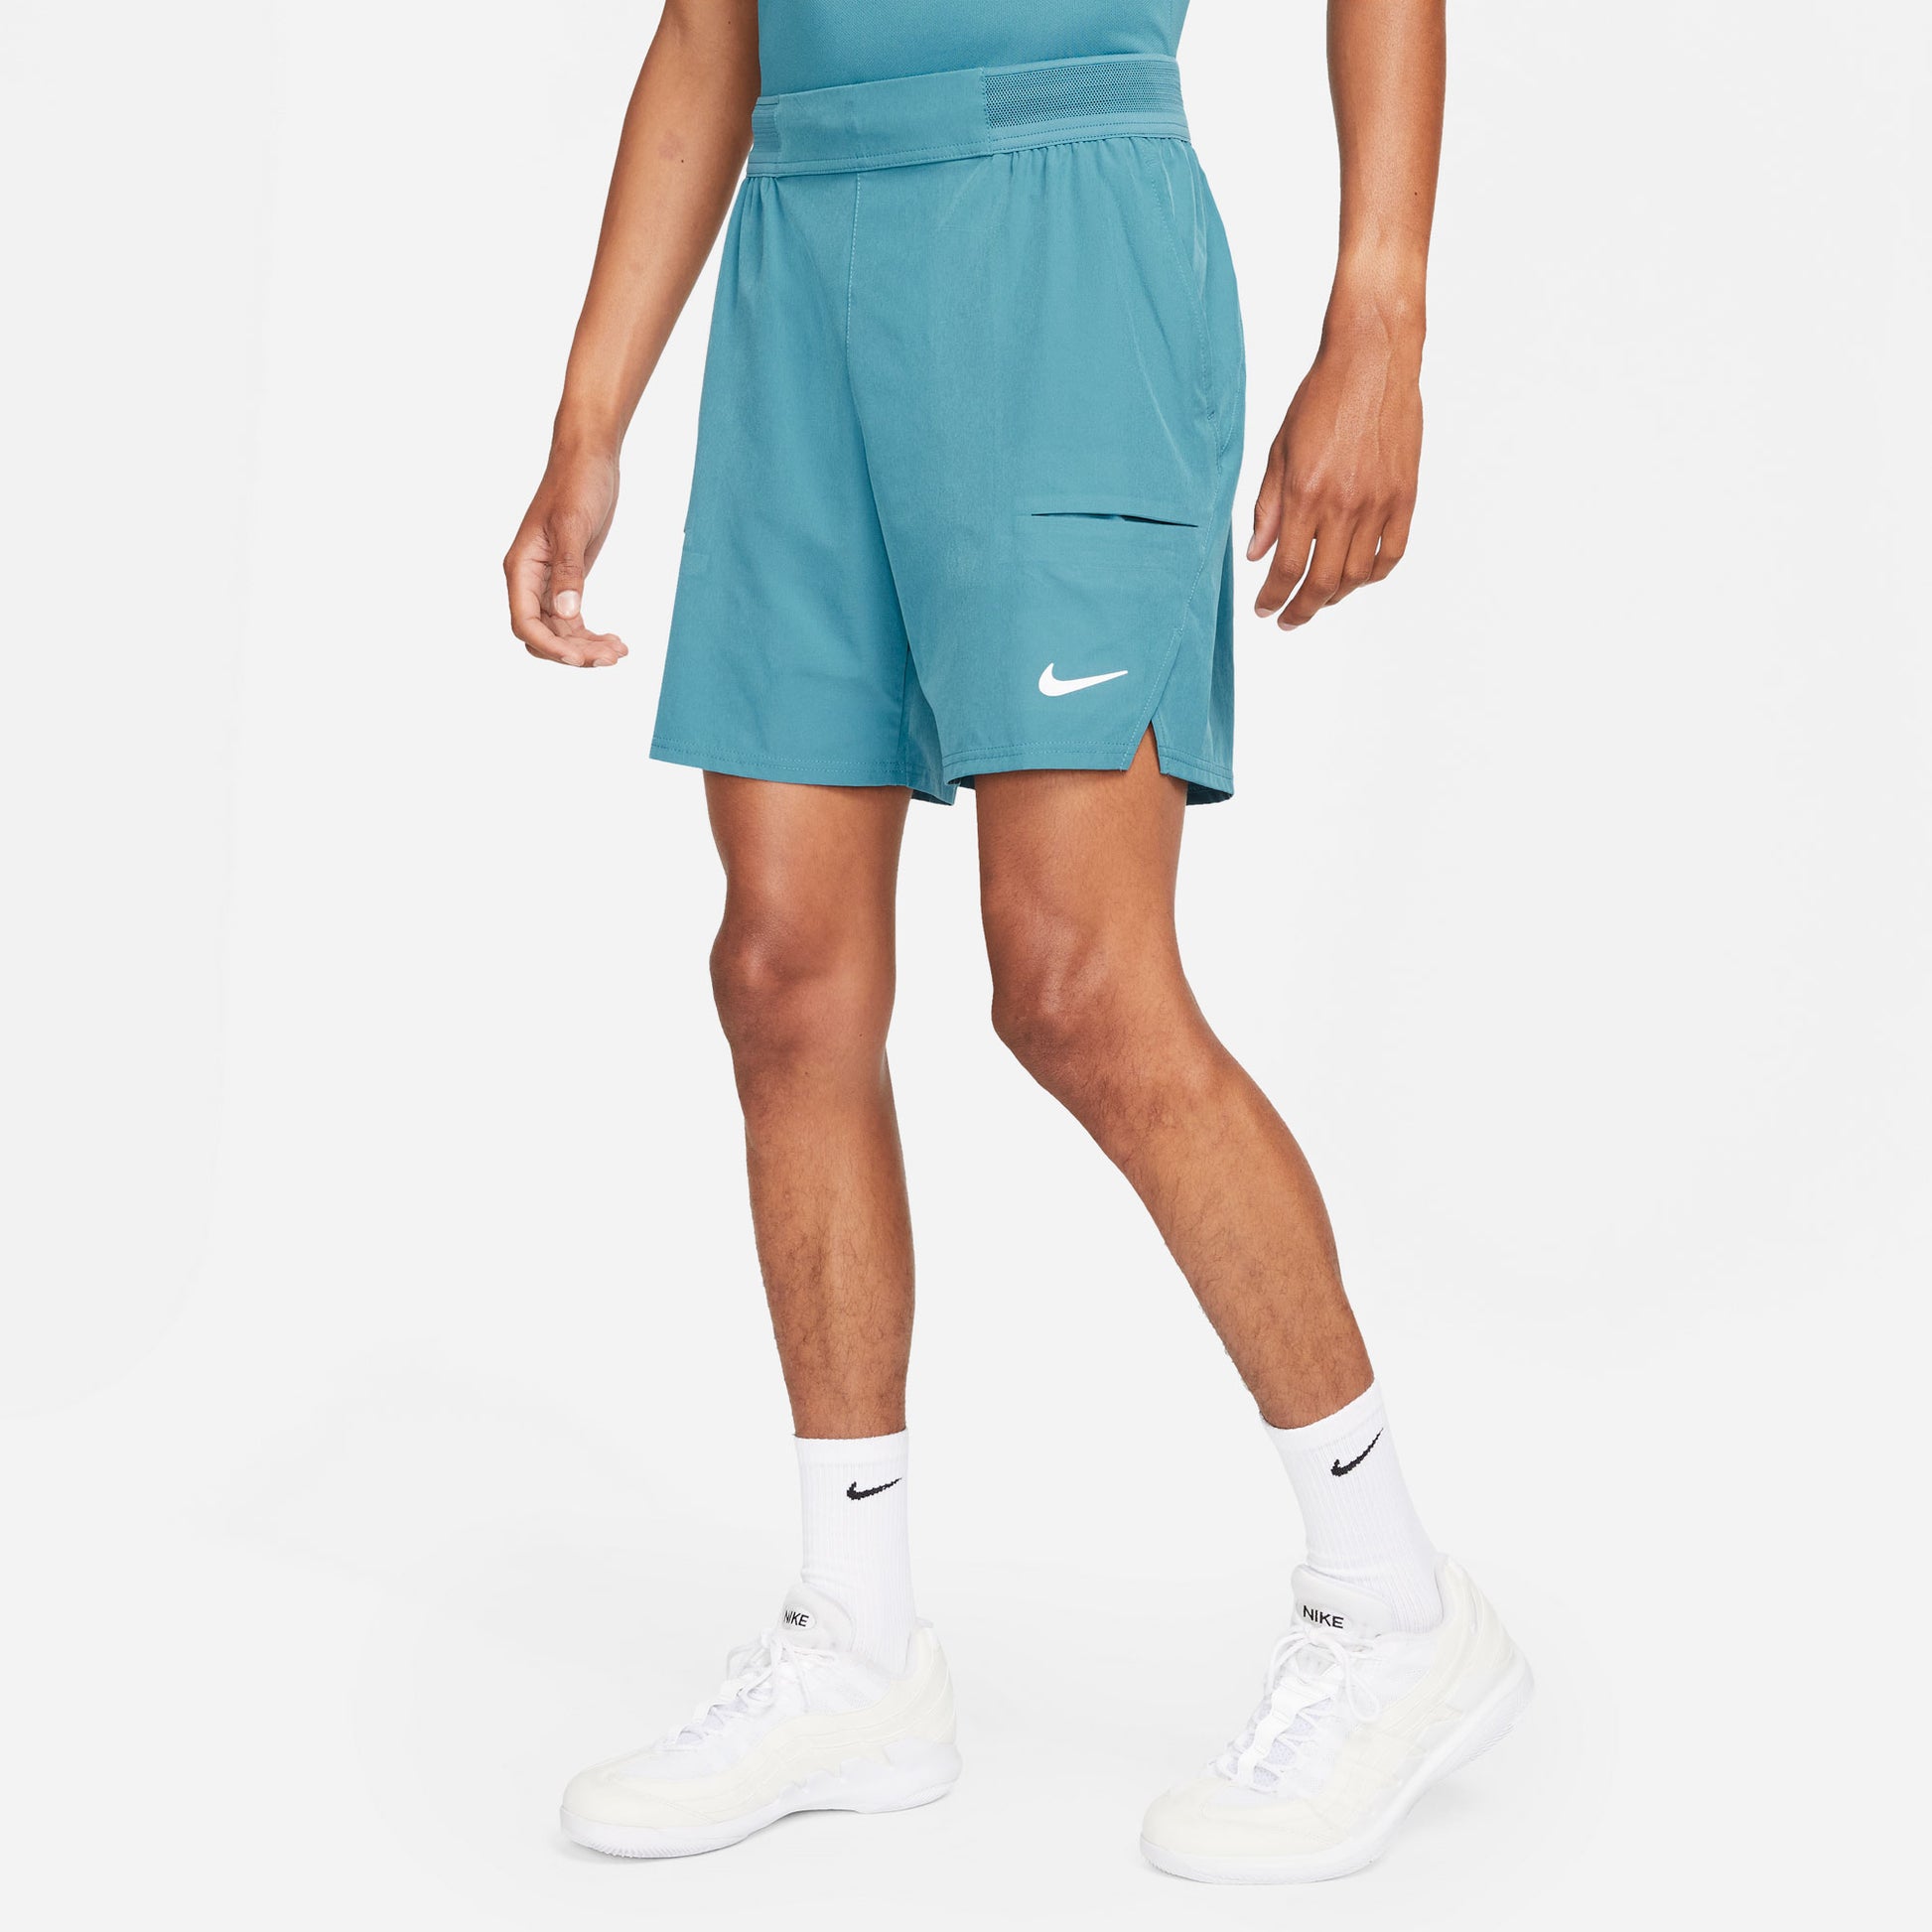 Nike Flex Advantage Men's 7-Inch Tennis Shorts Blue (1)